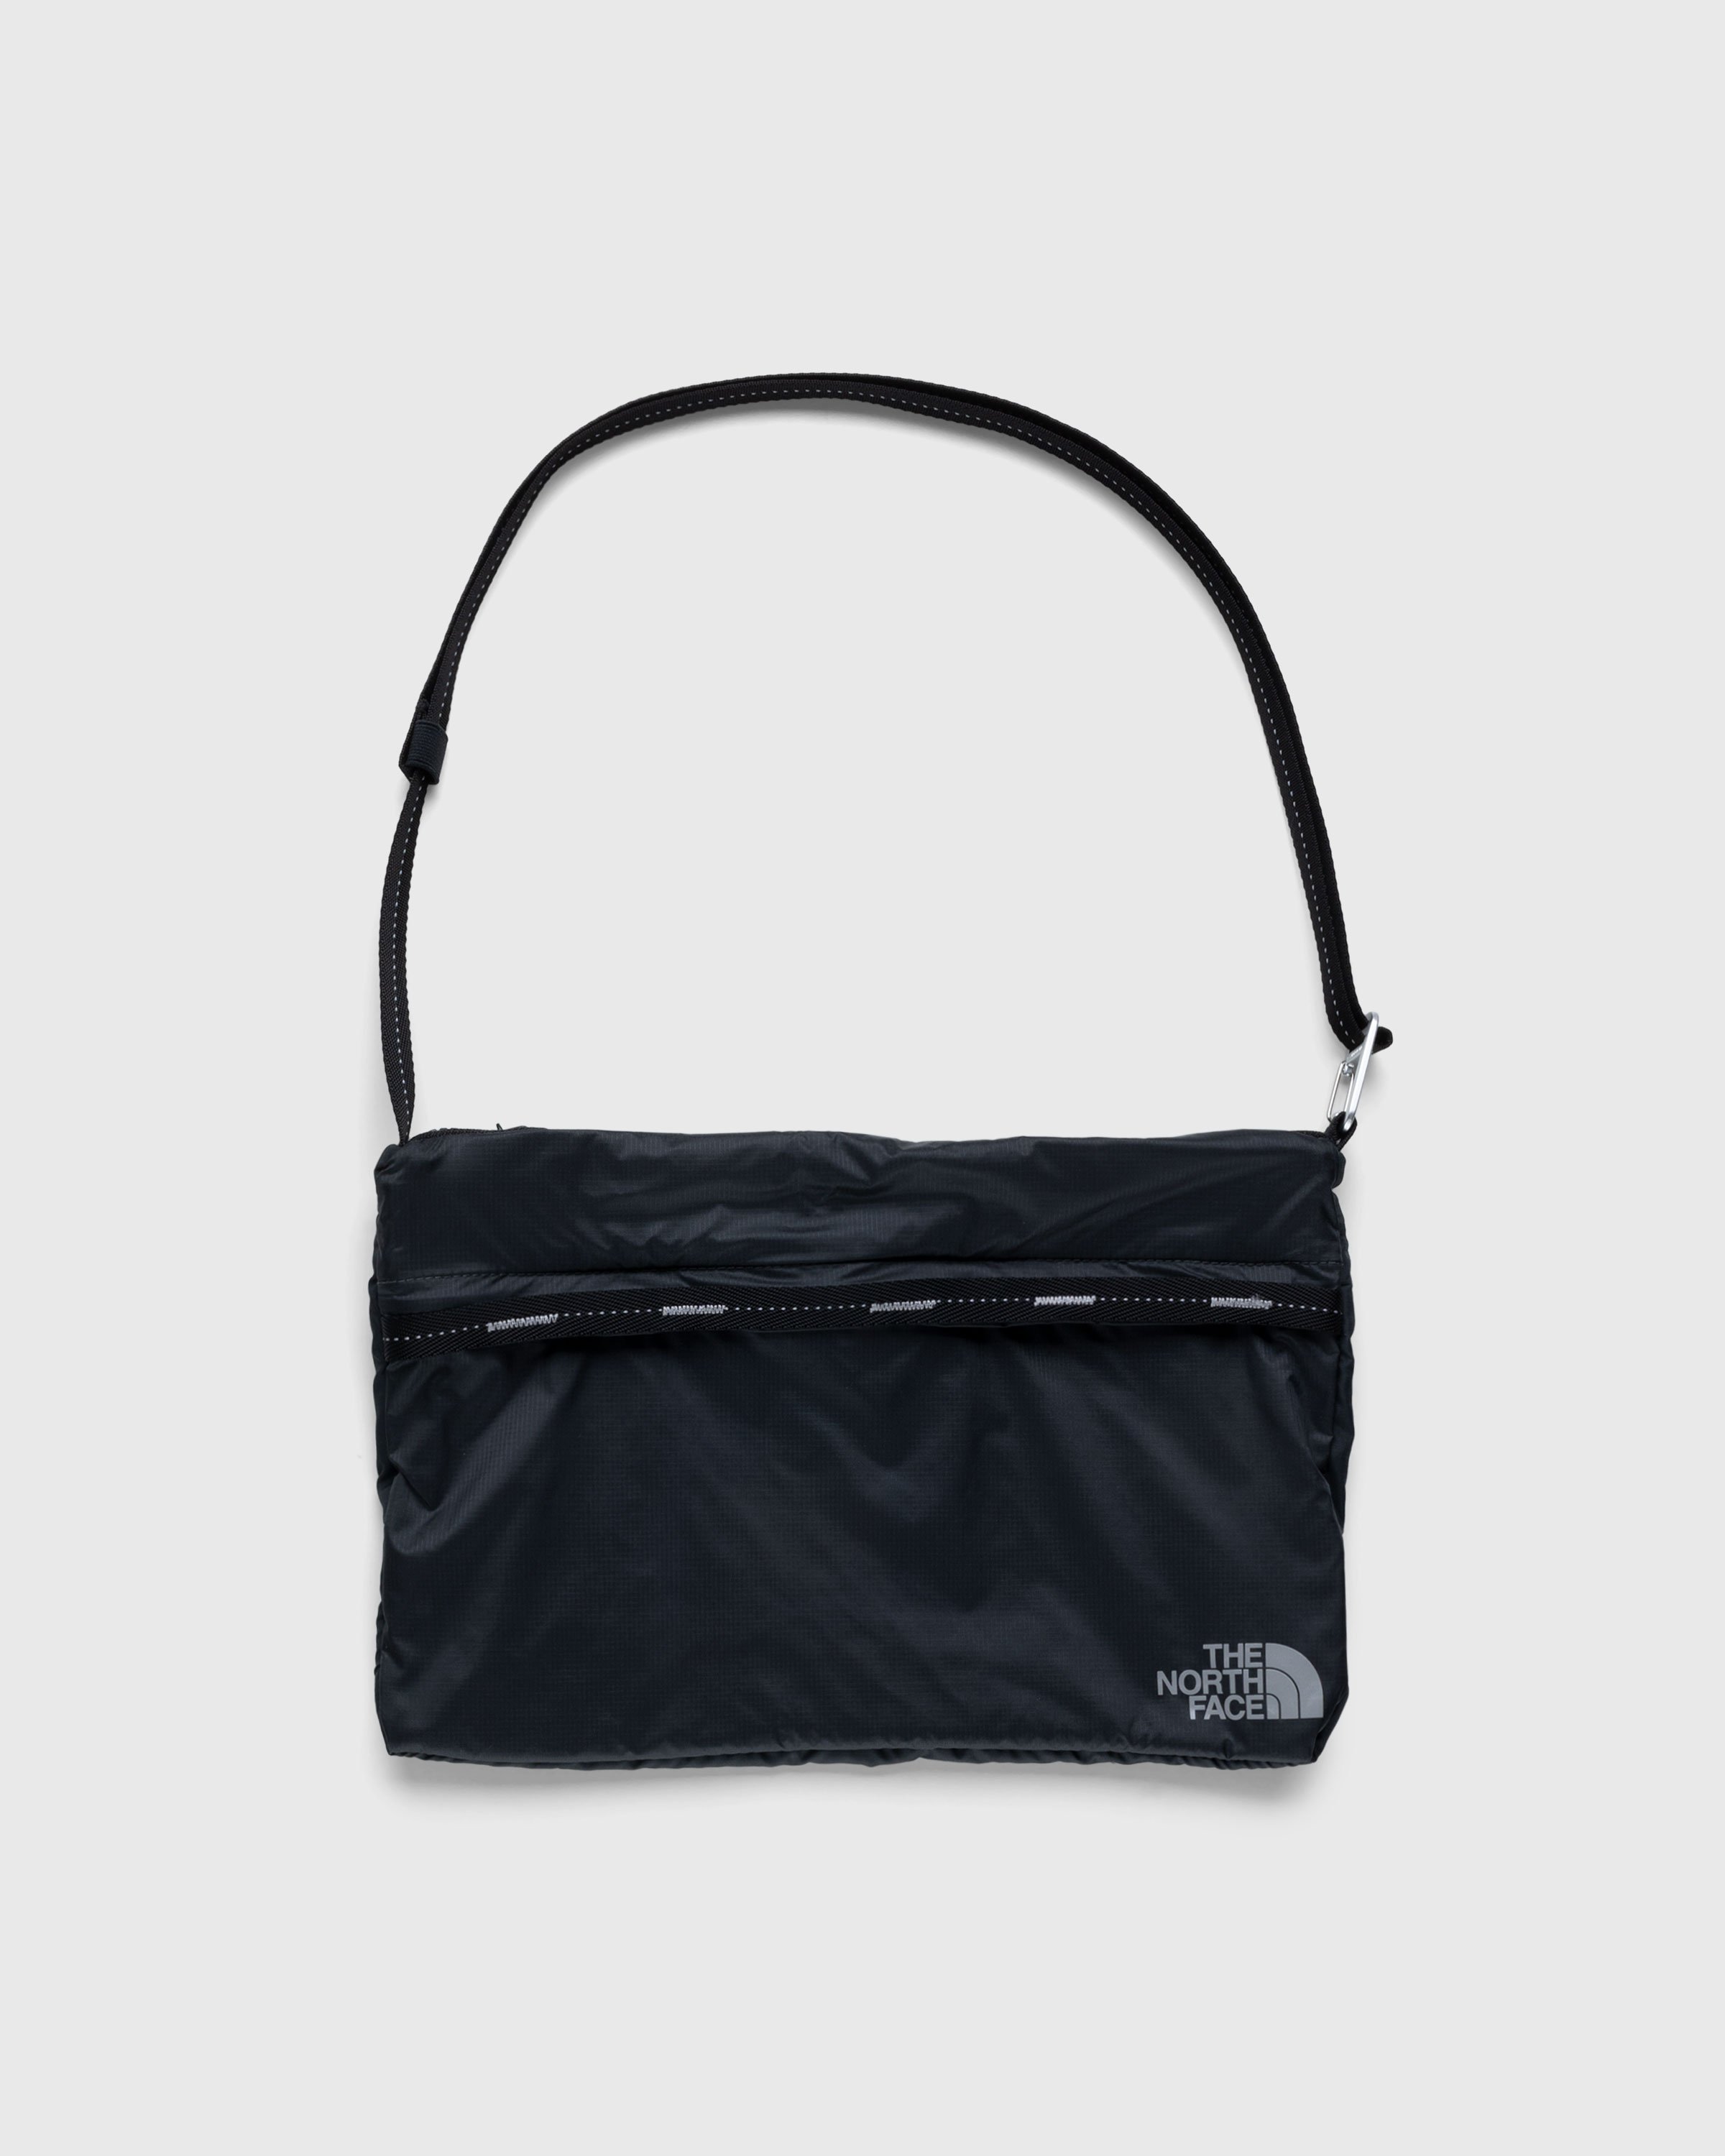 The North Face - Flyweight Shoulder Bag Grey/Black - Accessories - Grey - Image 1